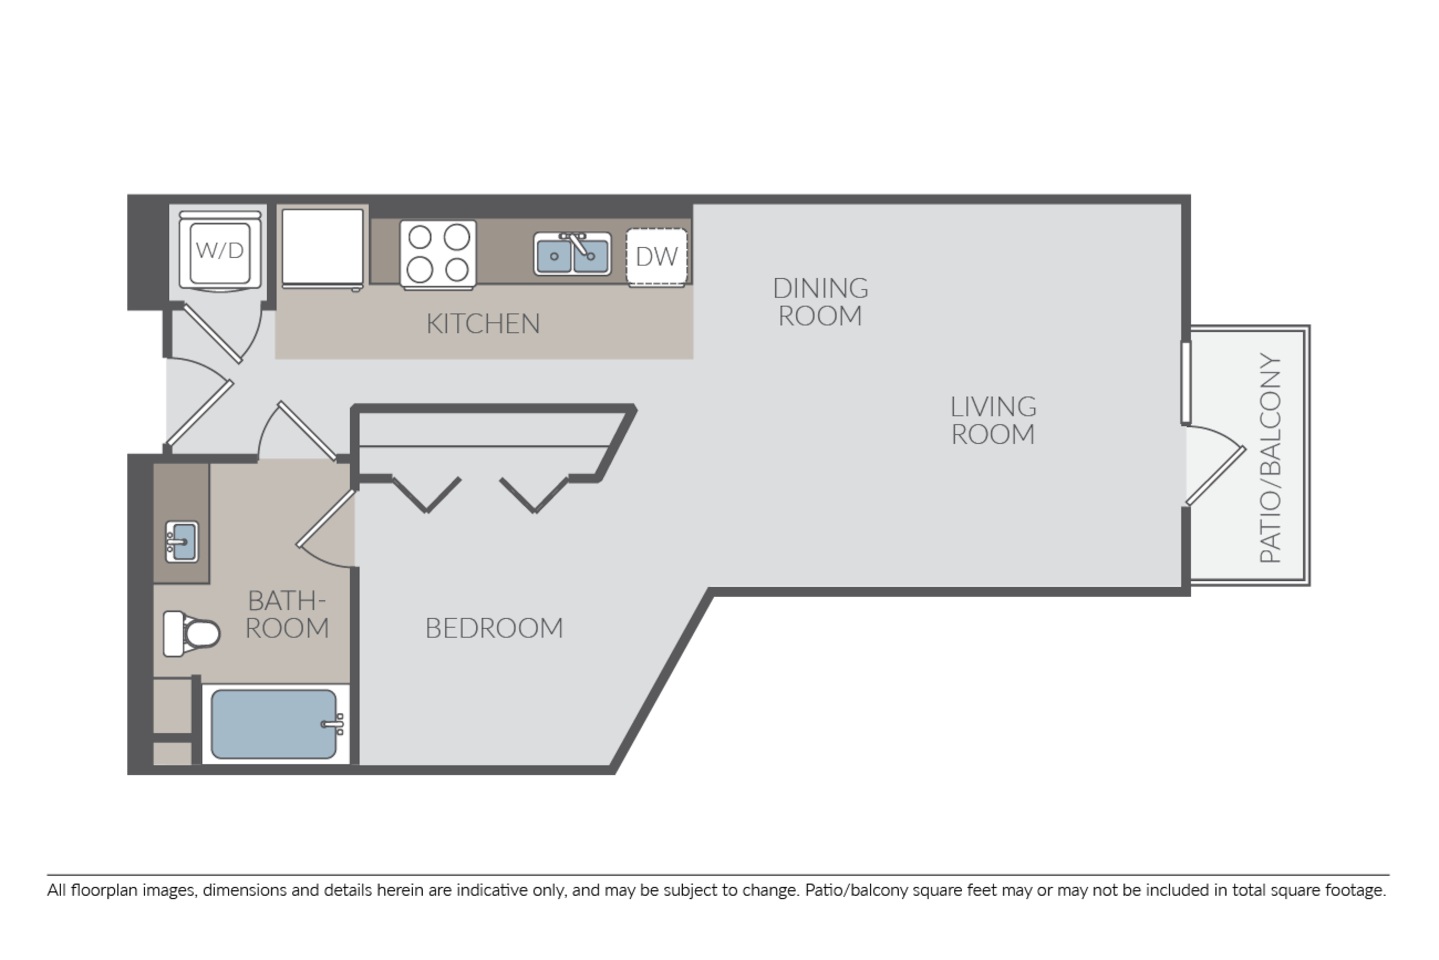 Floorplan diagram for A3, showing Studio